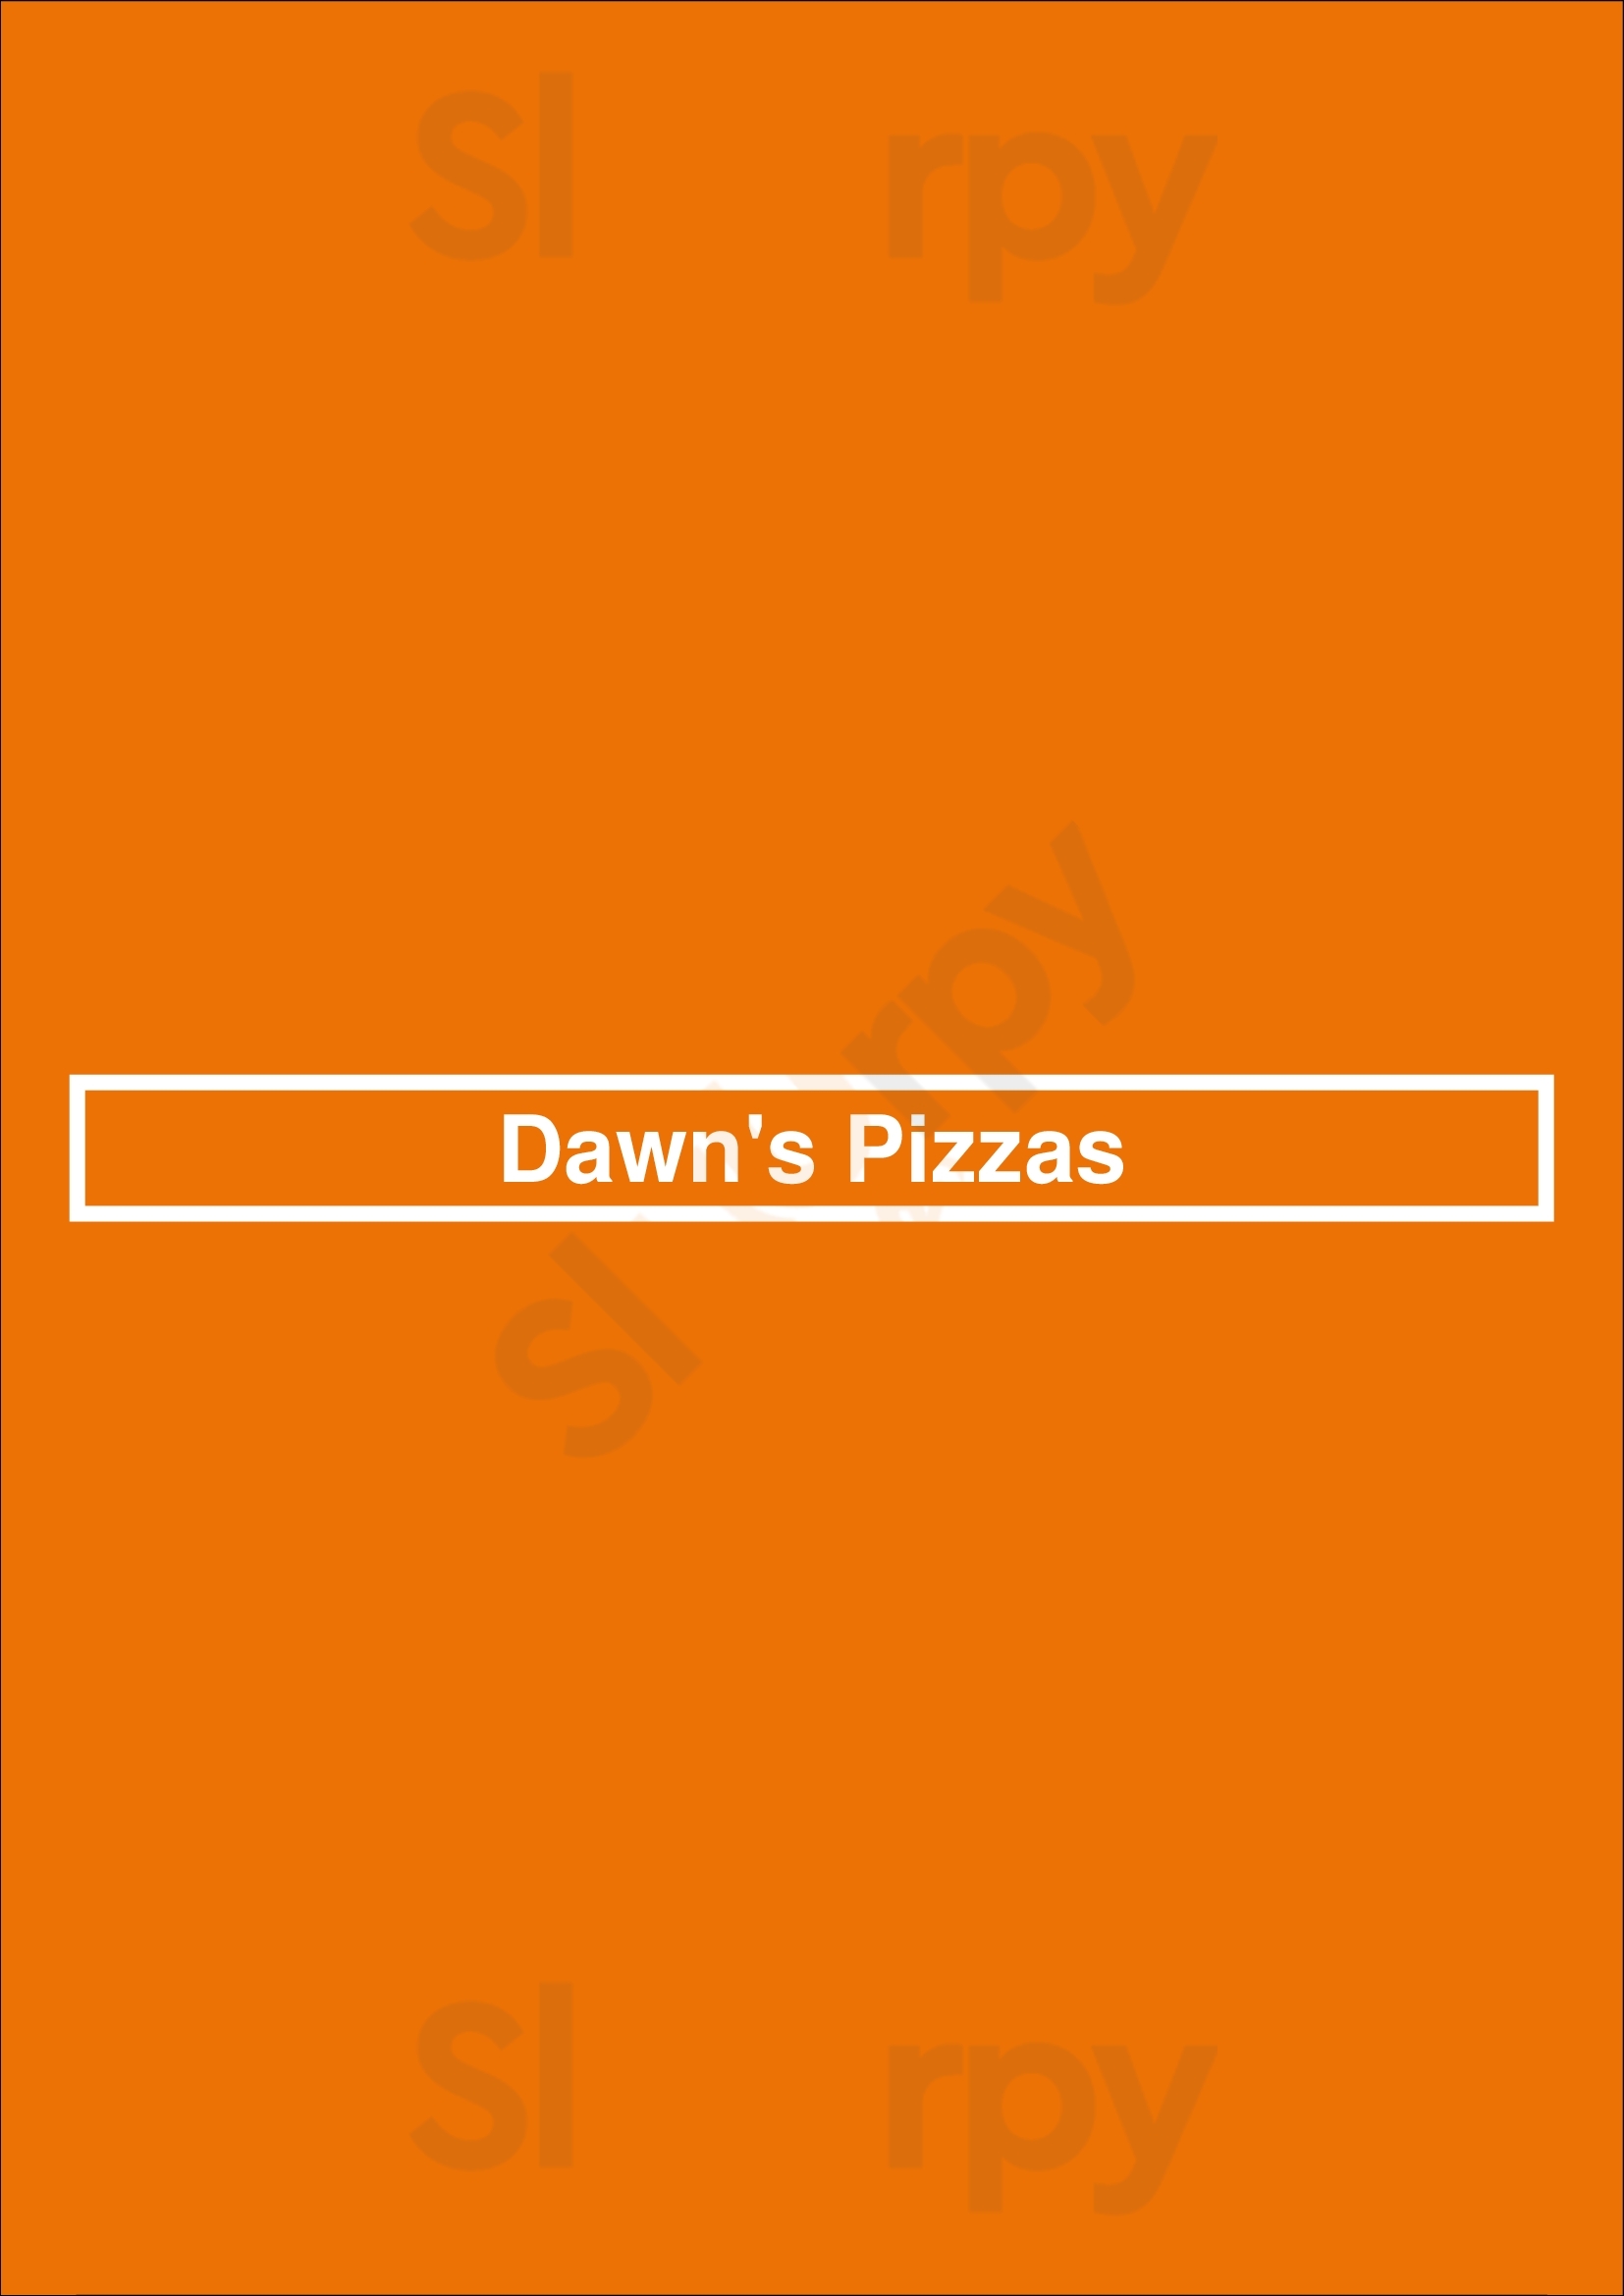 Dawn's Pizzas Leeds Menu - 1